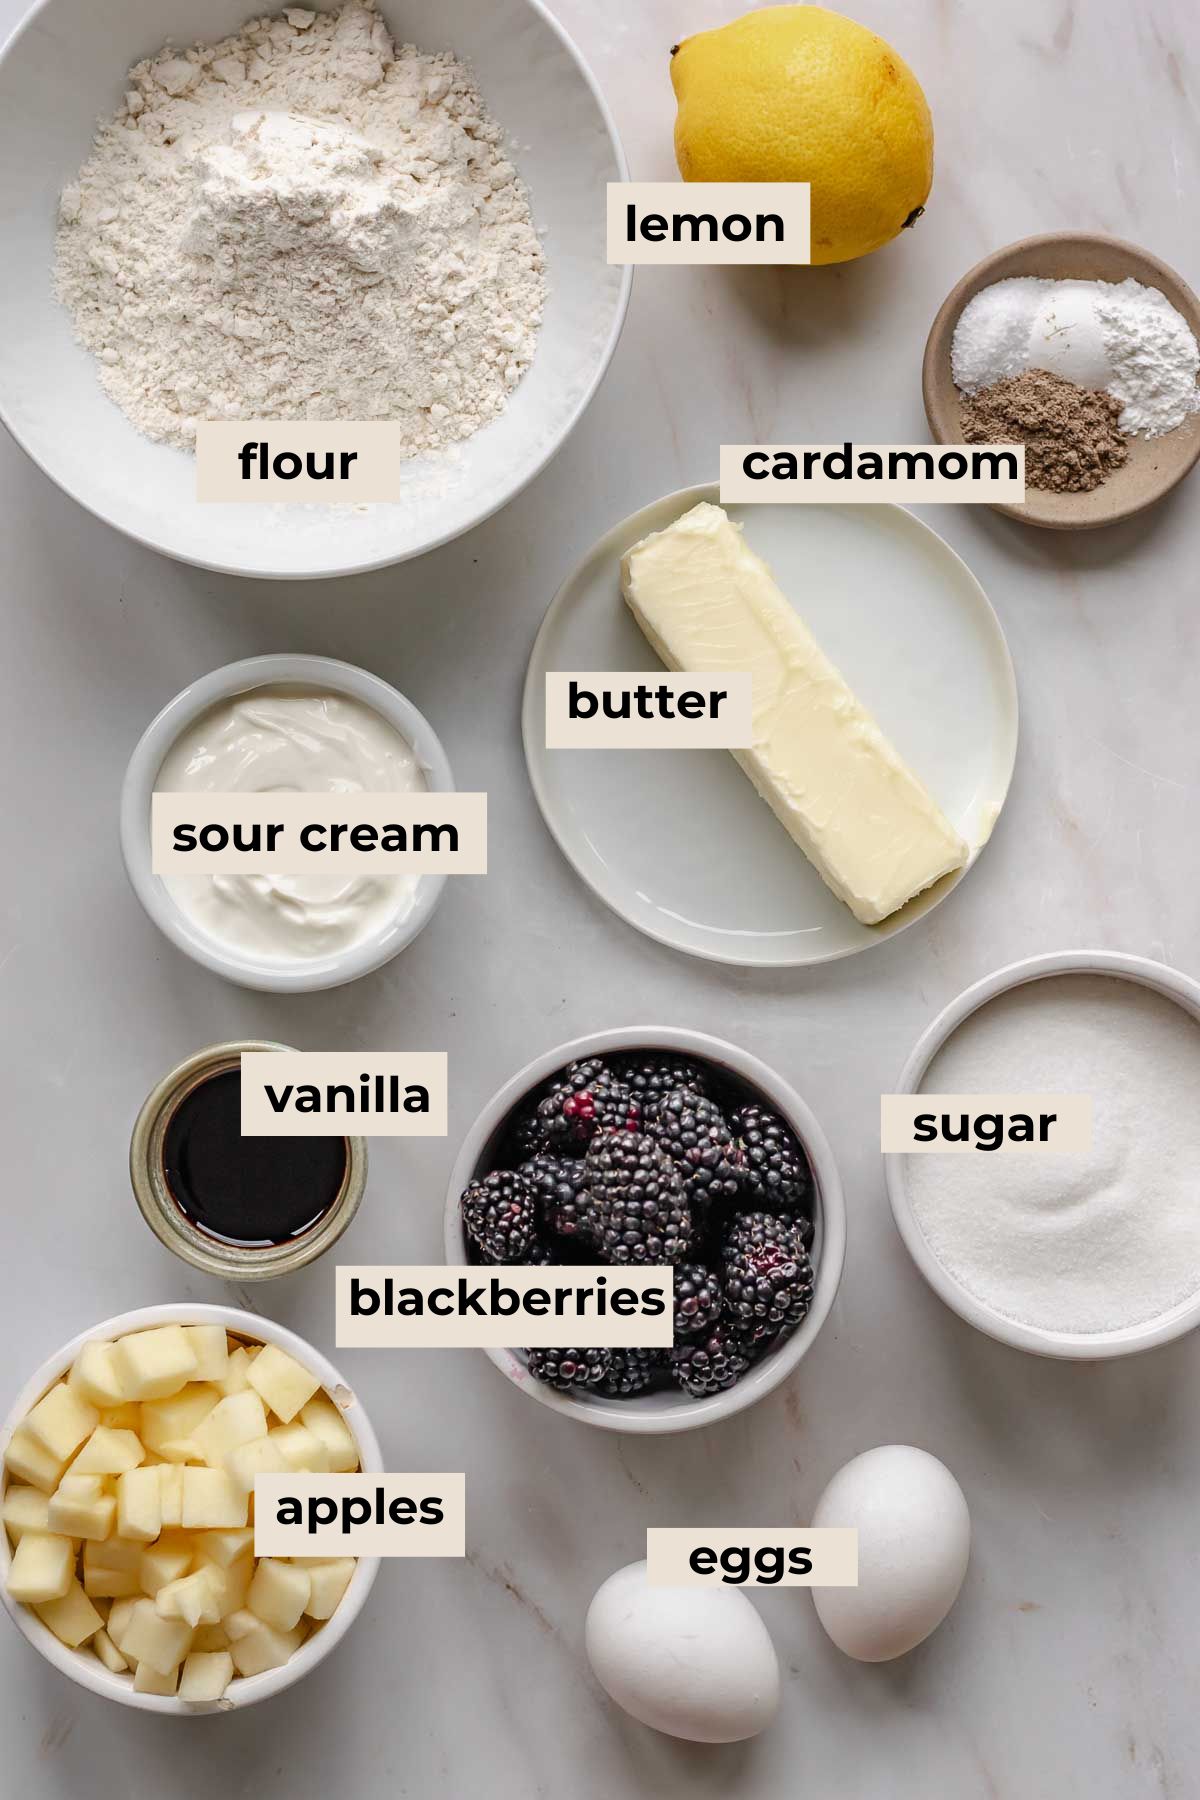 Ingredients for blackberry apple cake.